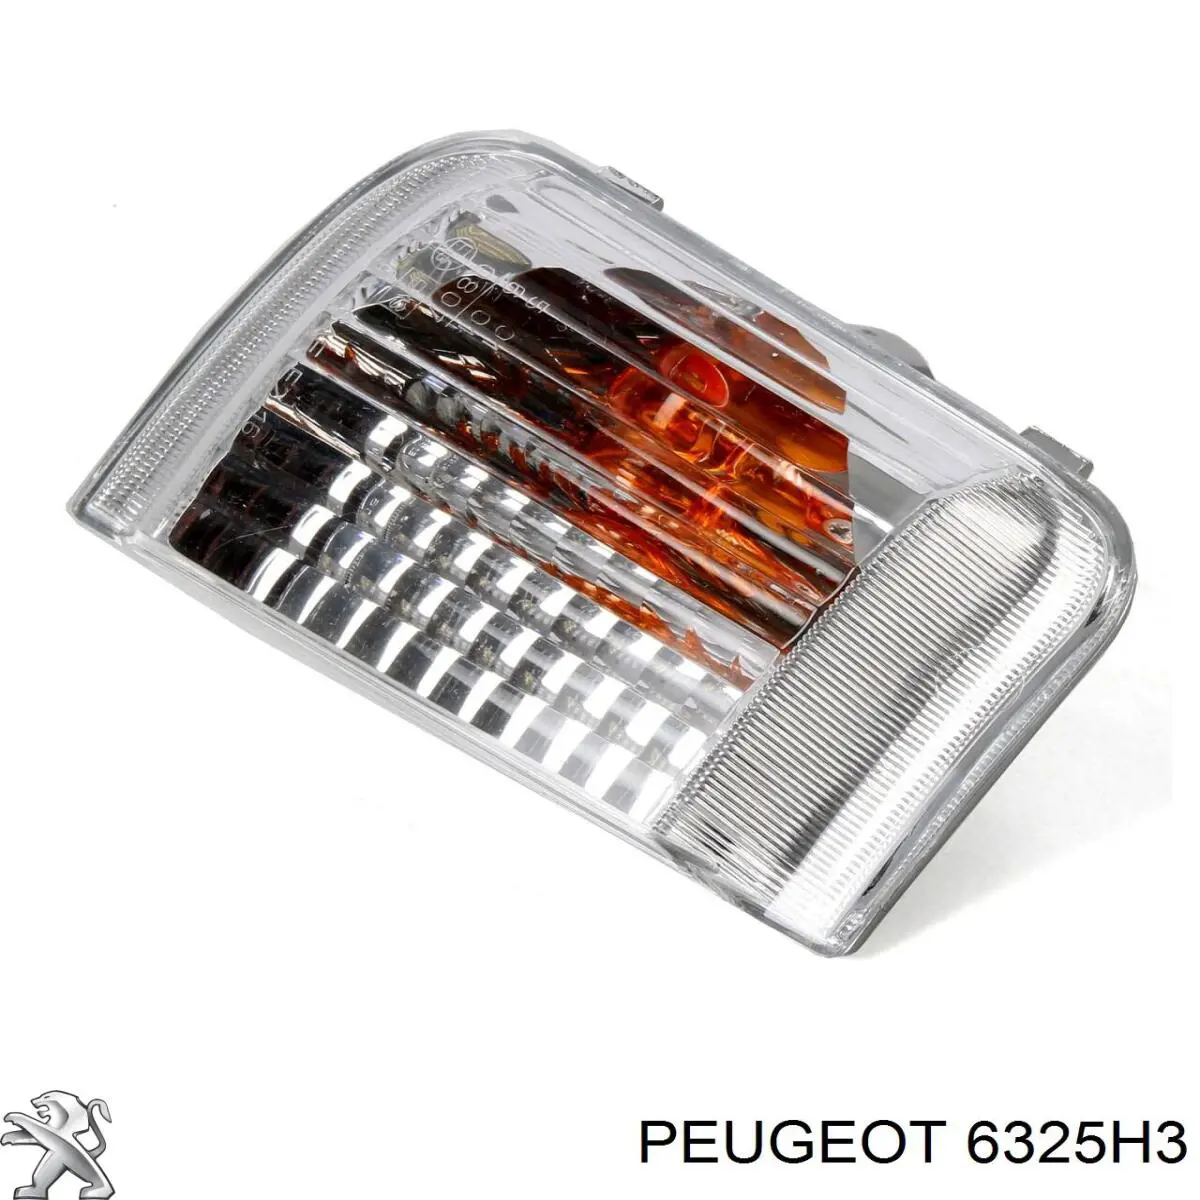 6325H3 Peugeot/Citroen pisca-pisca de espelho esquerdo